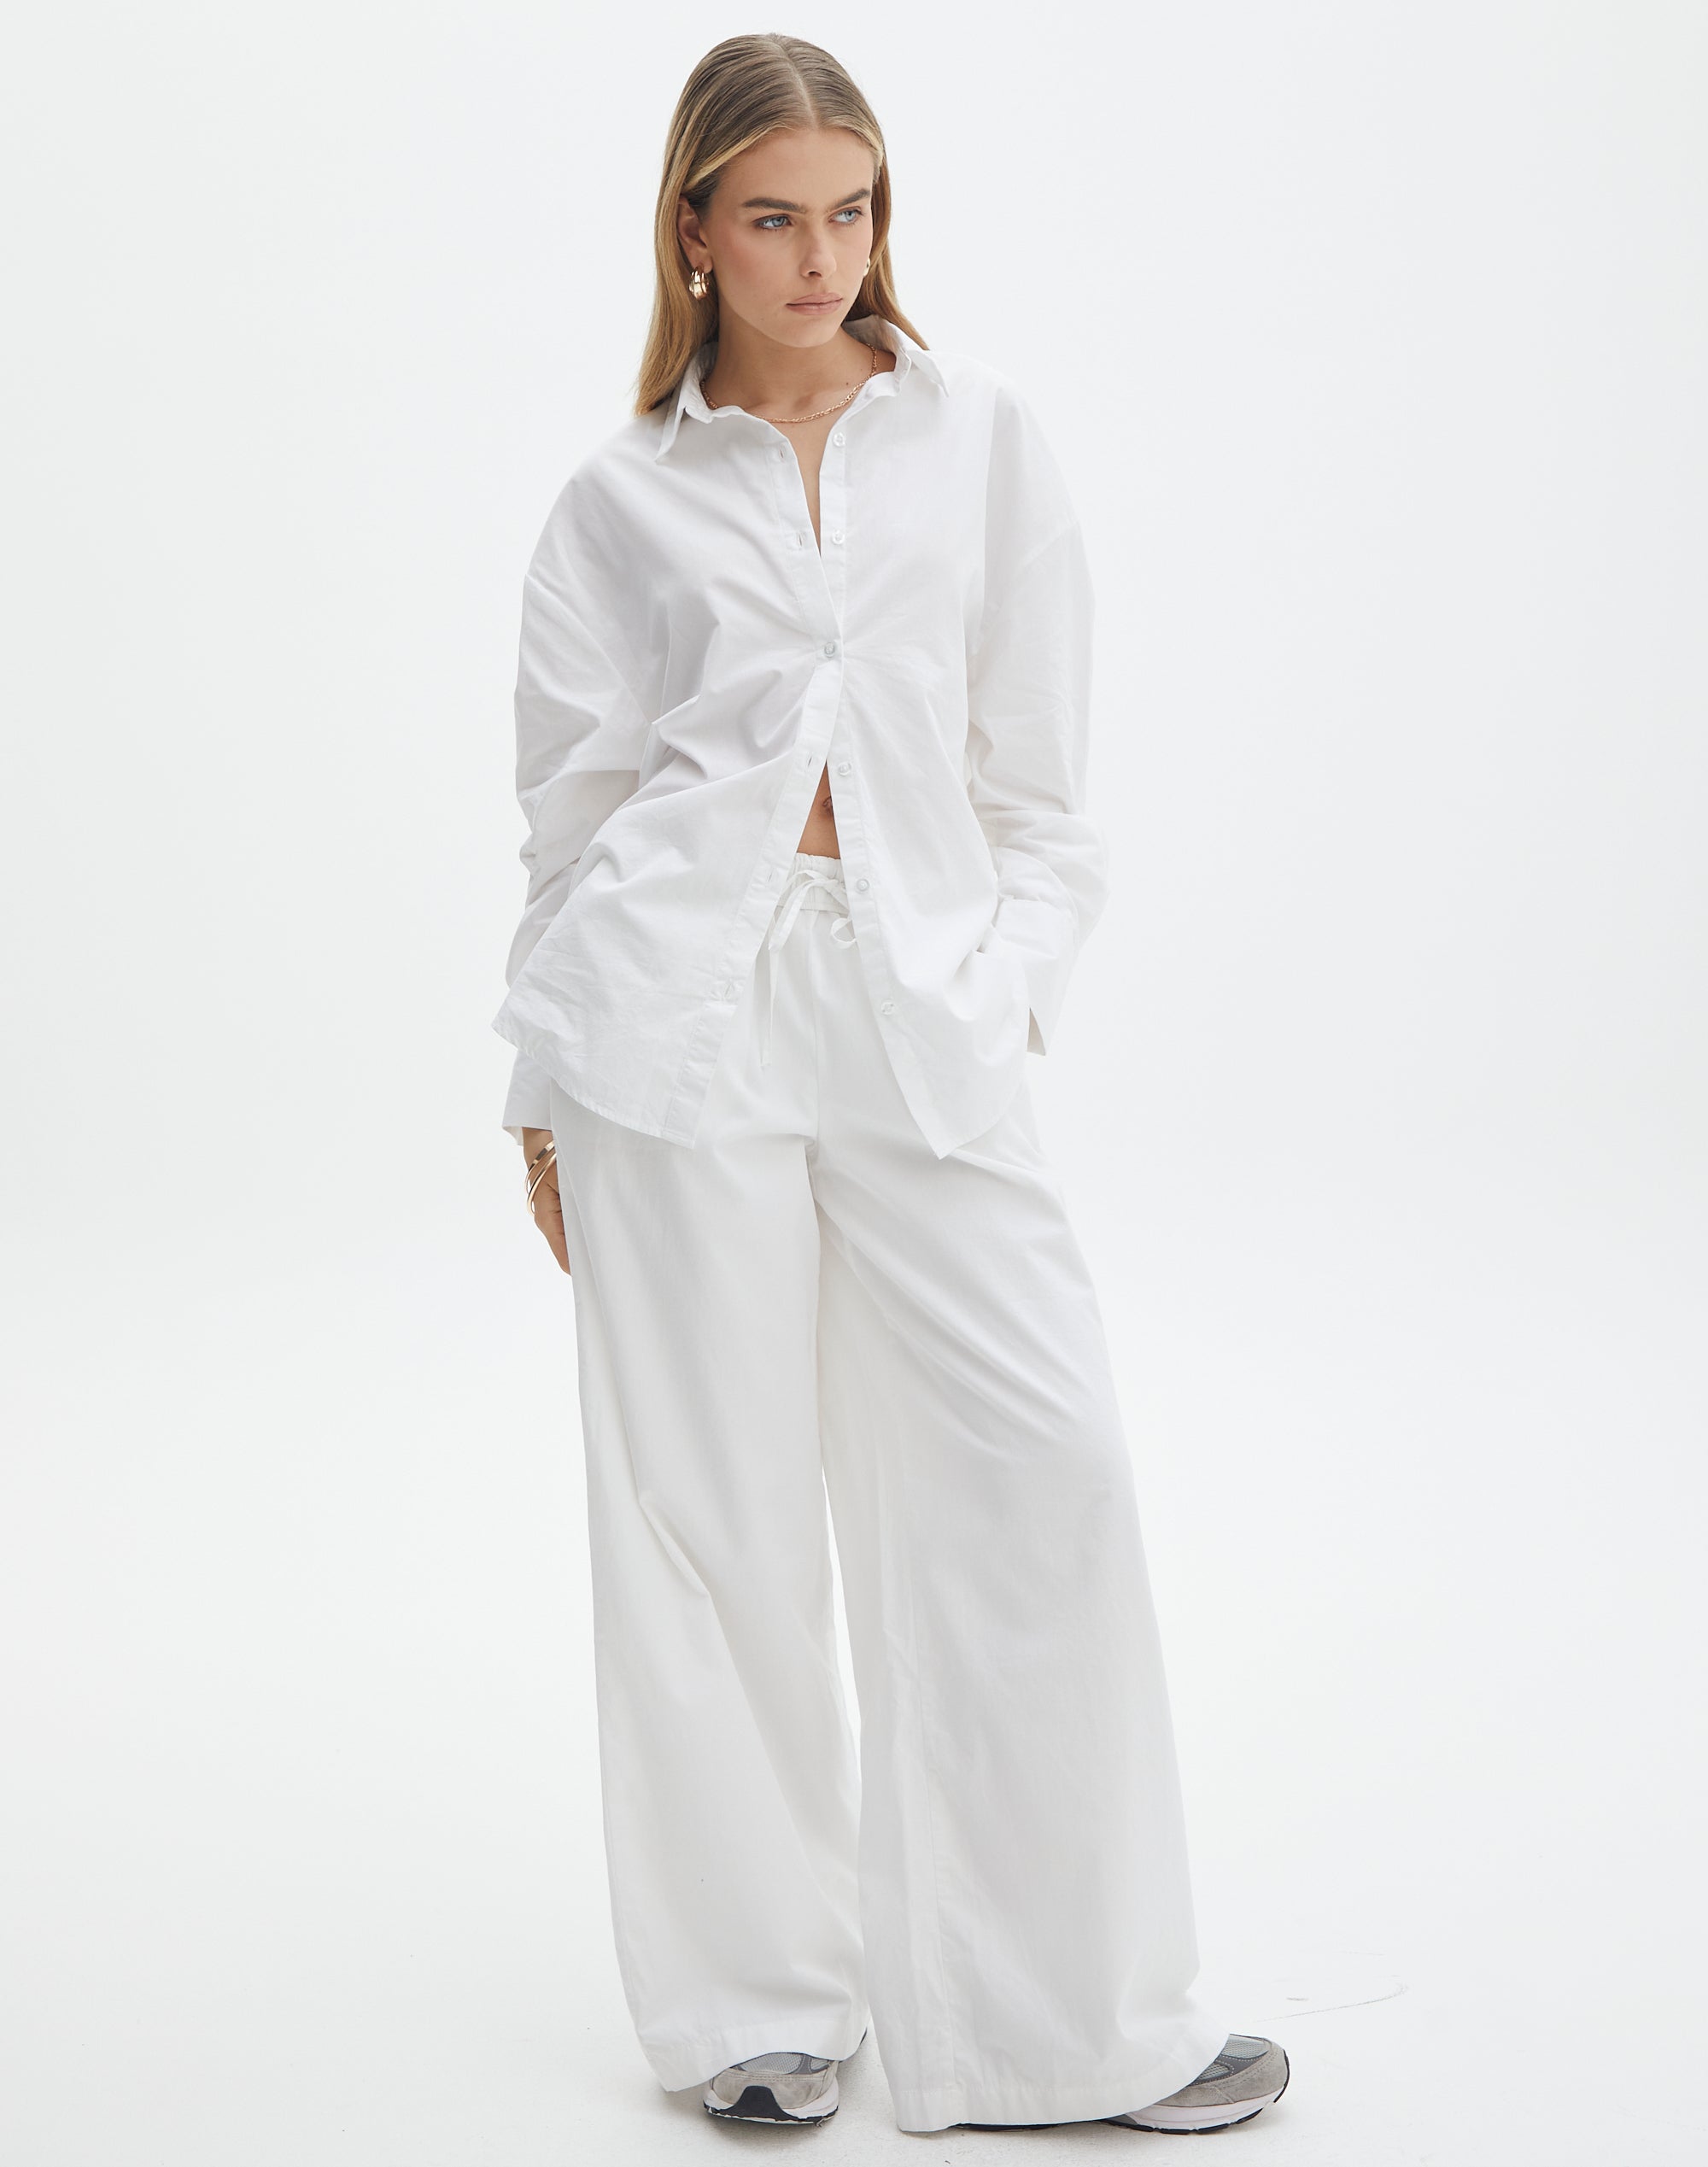 Winter Whites +Seasonal Sales Picks | Wide leg pants outfit, White blazer  outfits, Winter white outfit